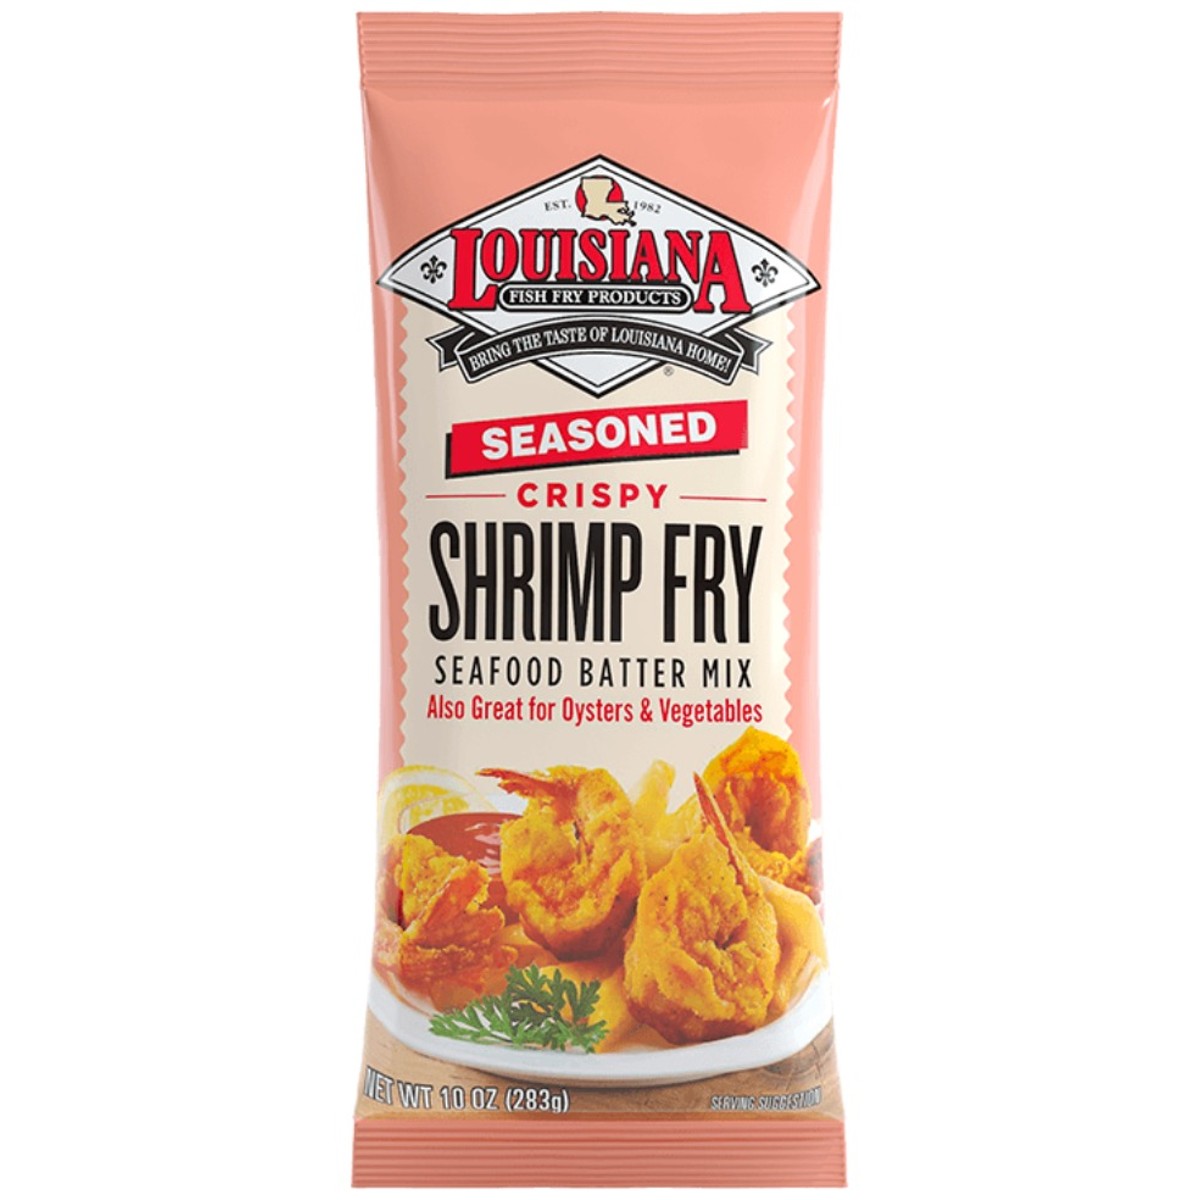 Louisiana Fish Fry Products Gumbo File 1.125 oz